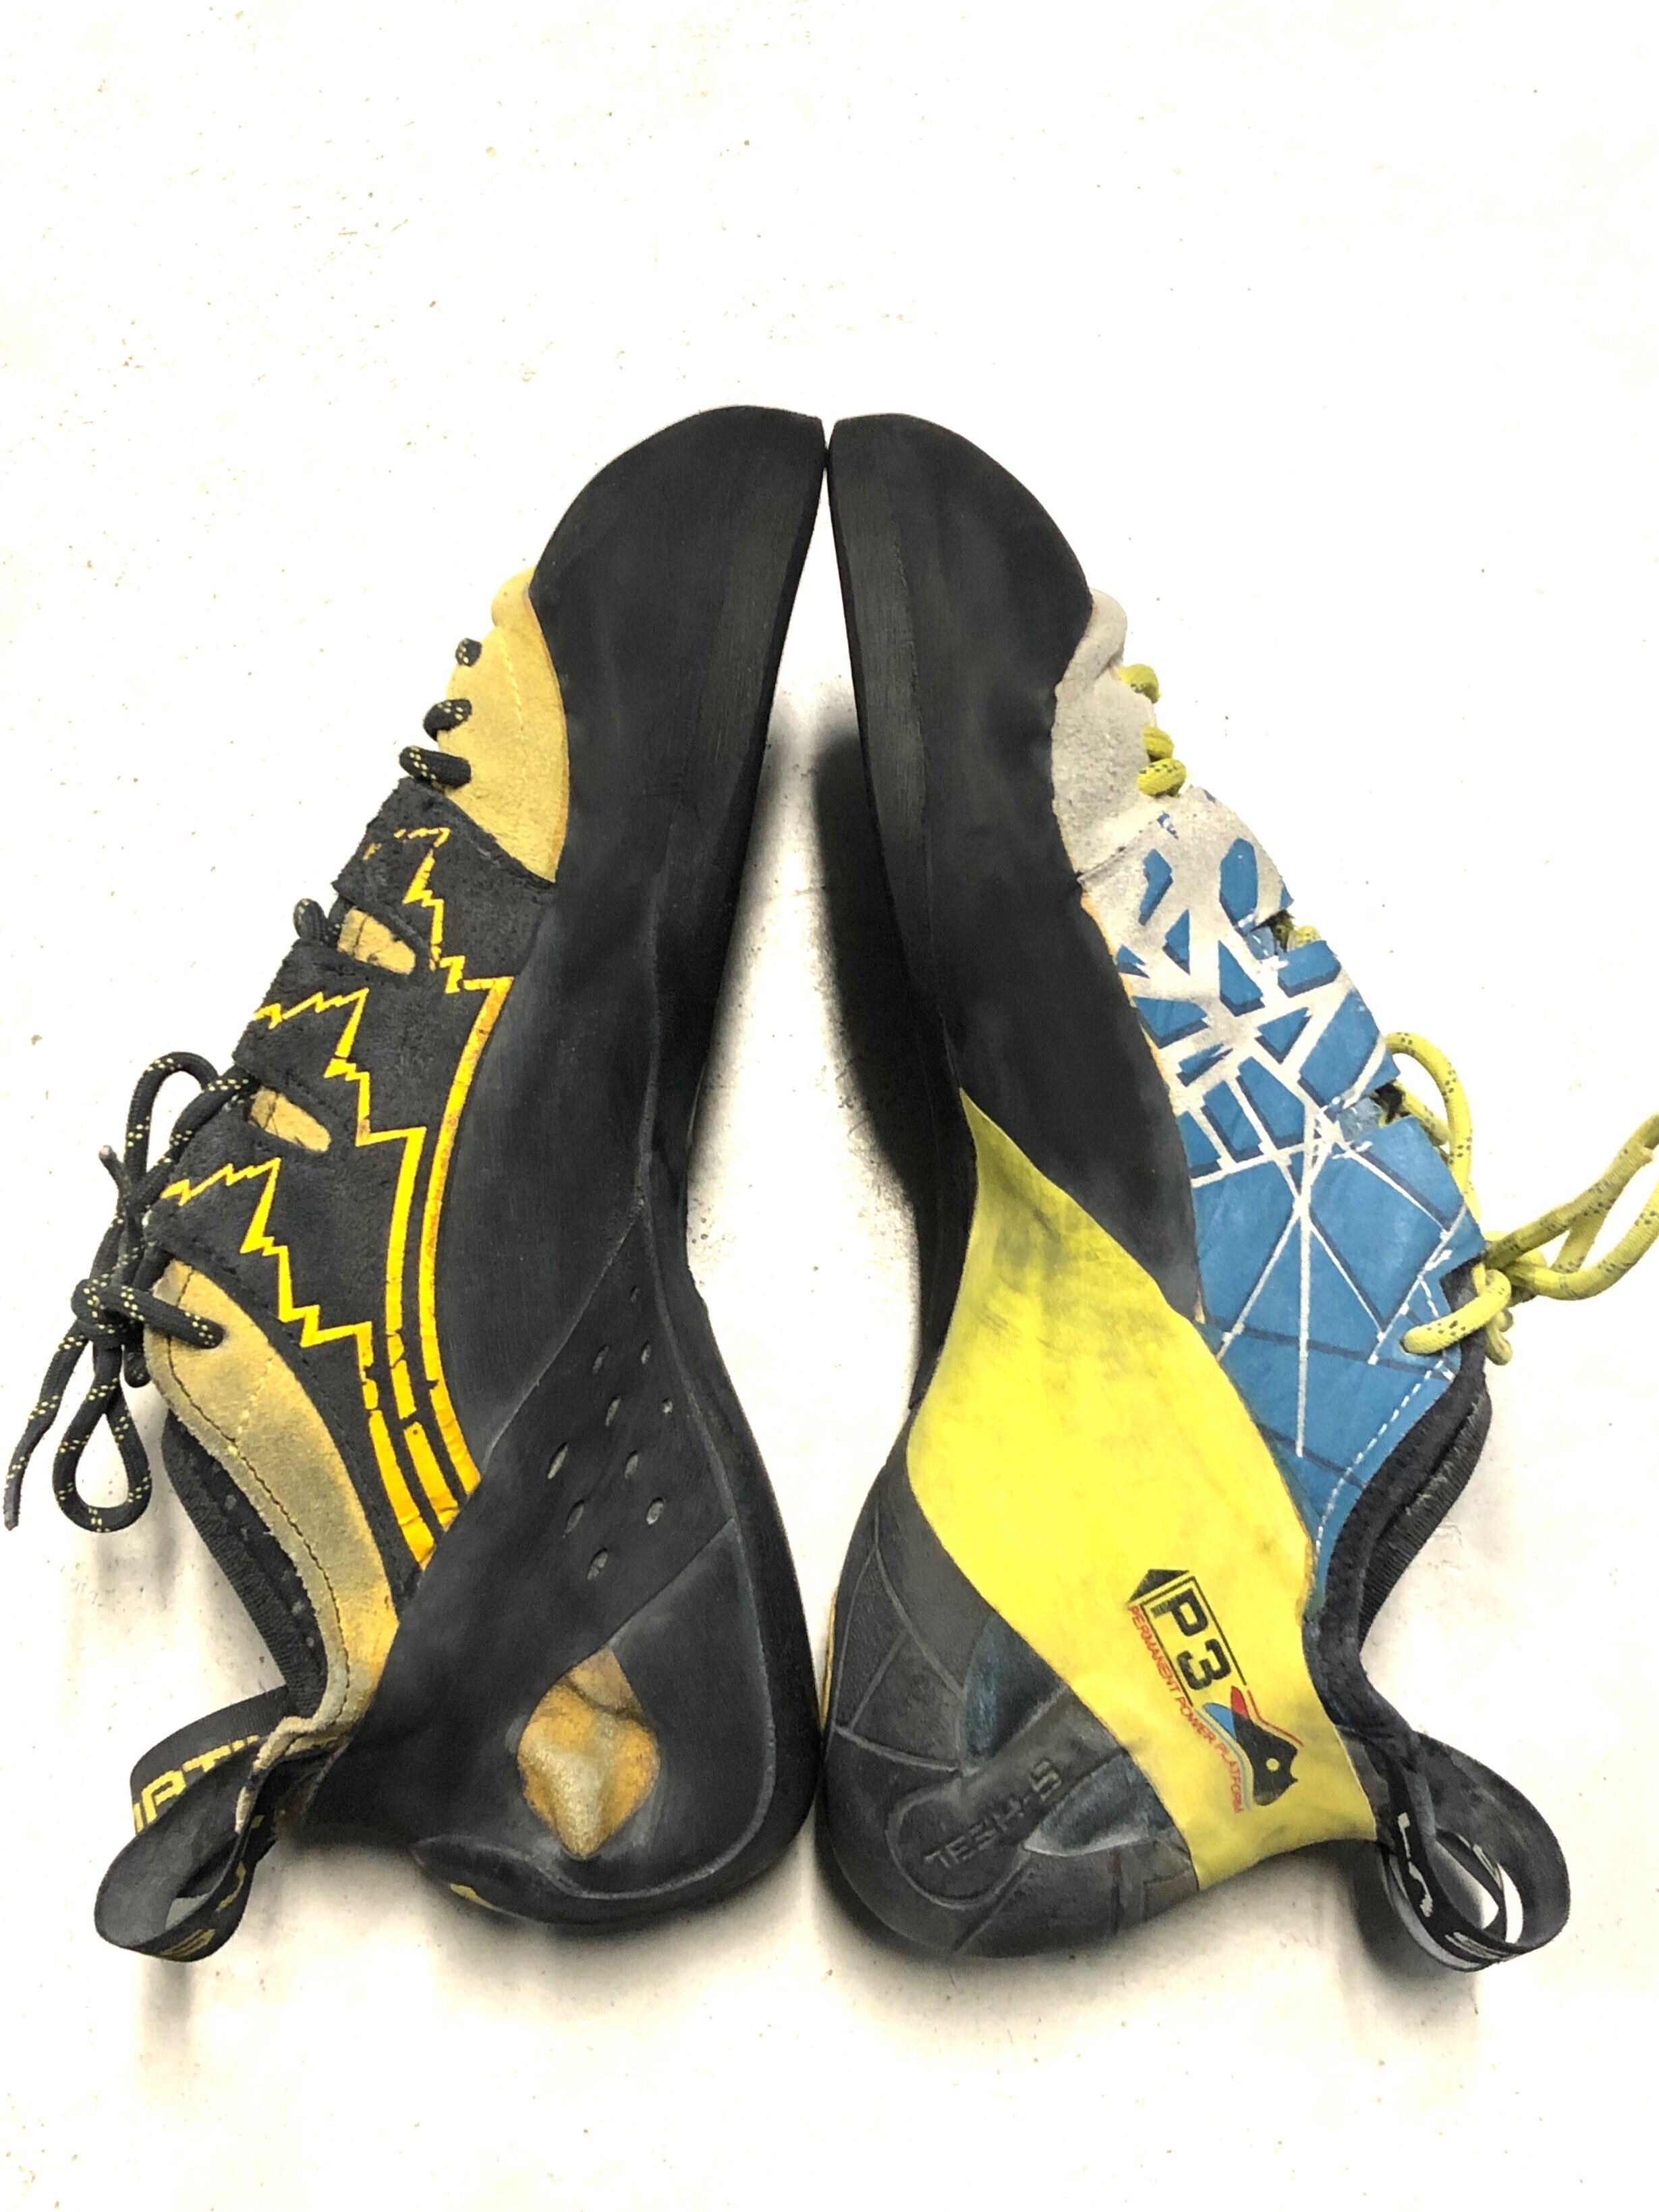 Resole Kit half sole Vibram XS Grip 2 Climbing Shoe 